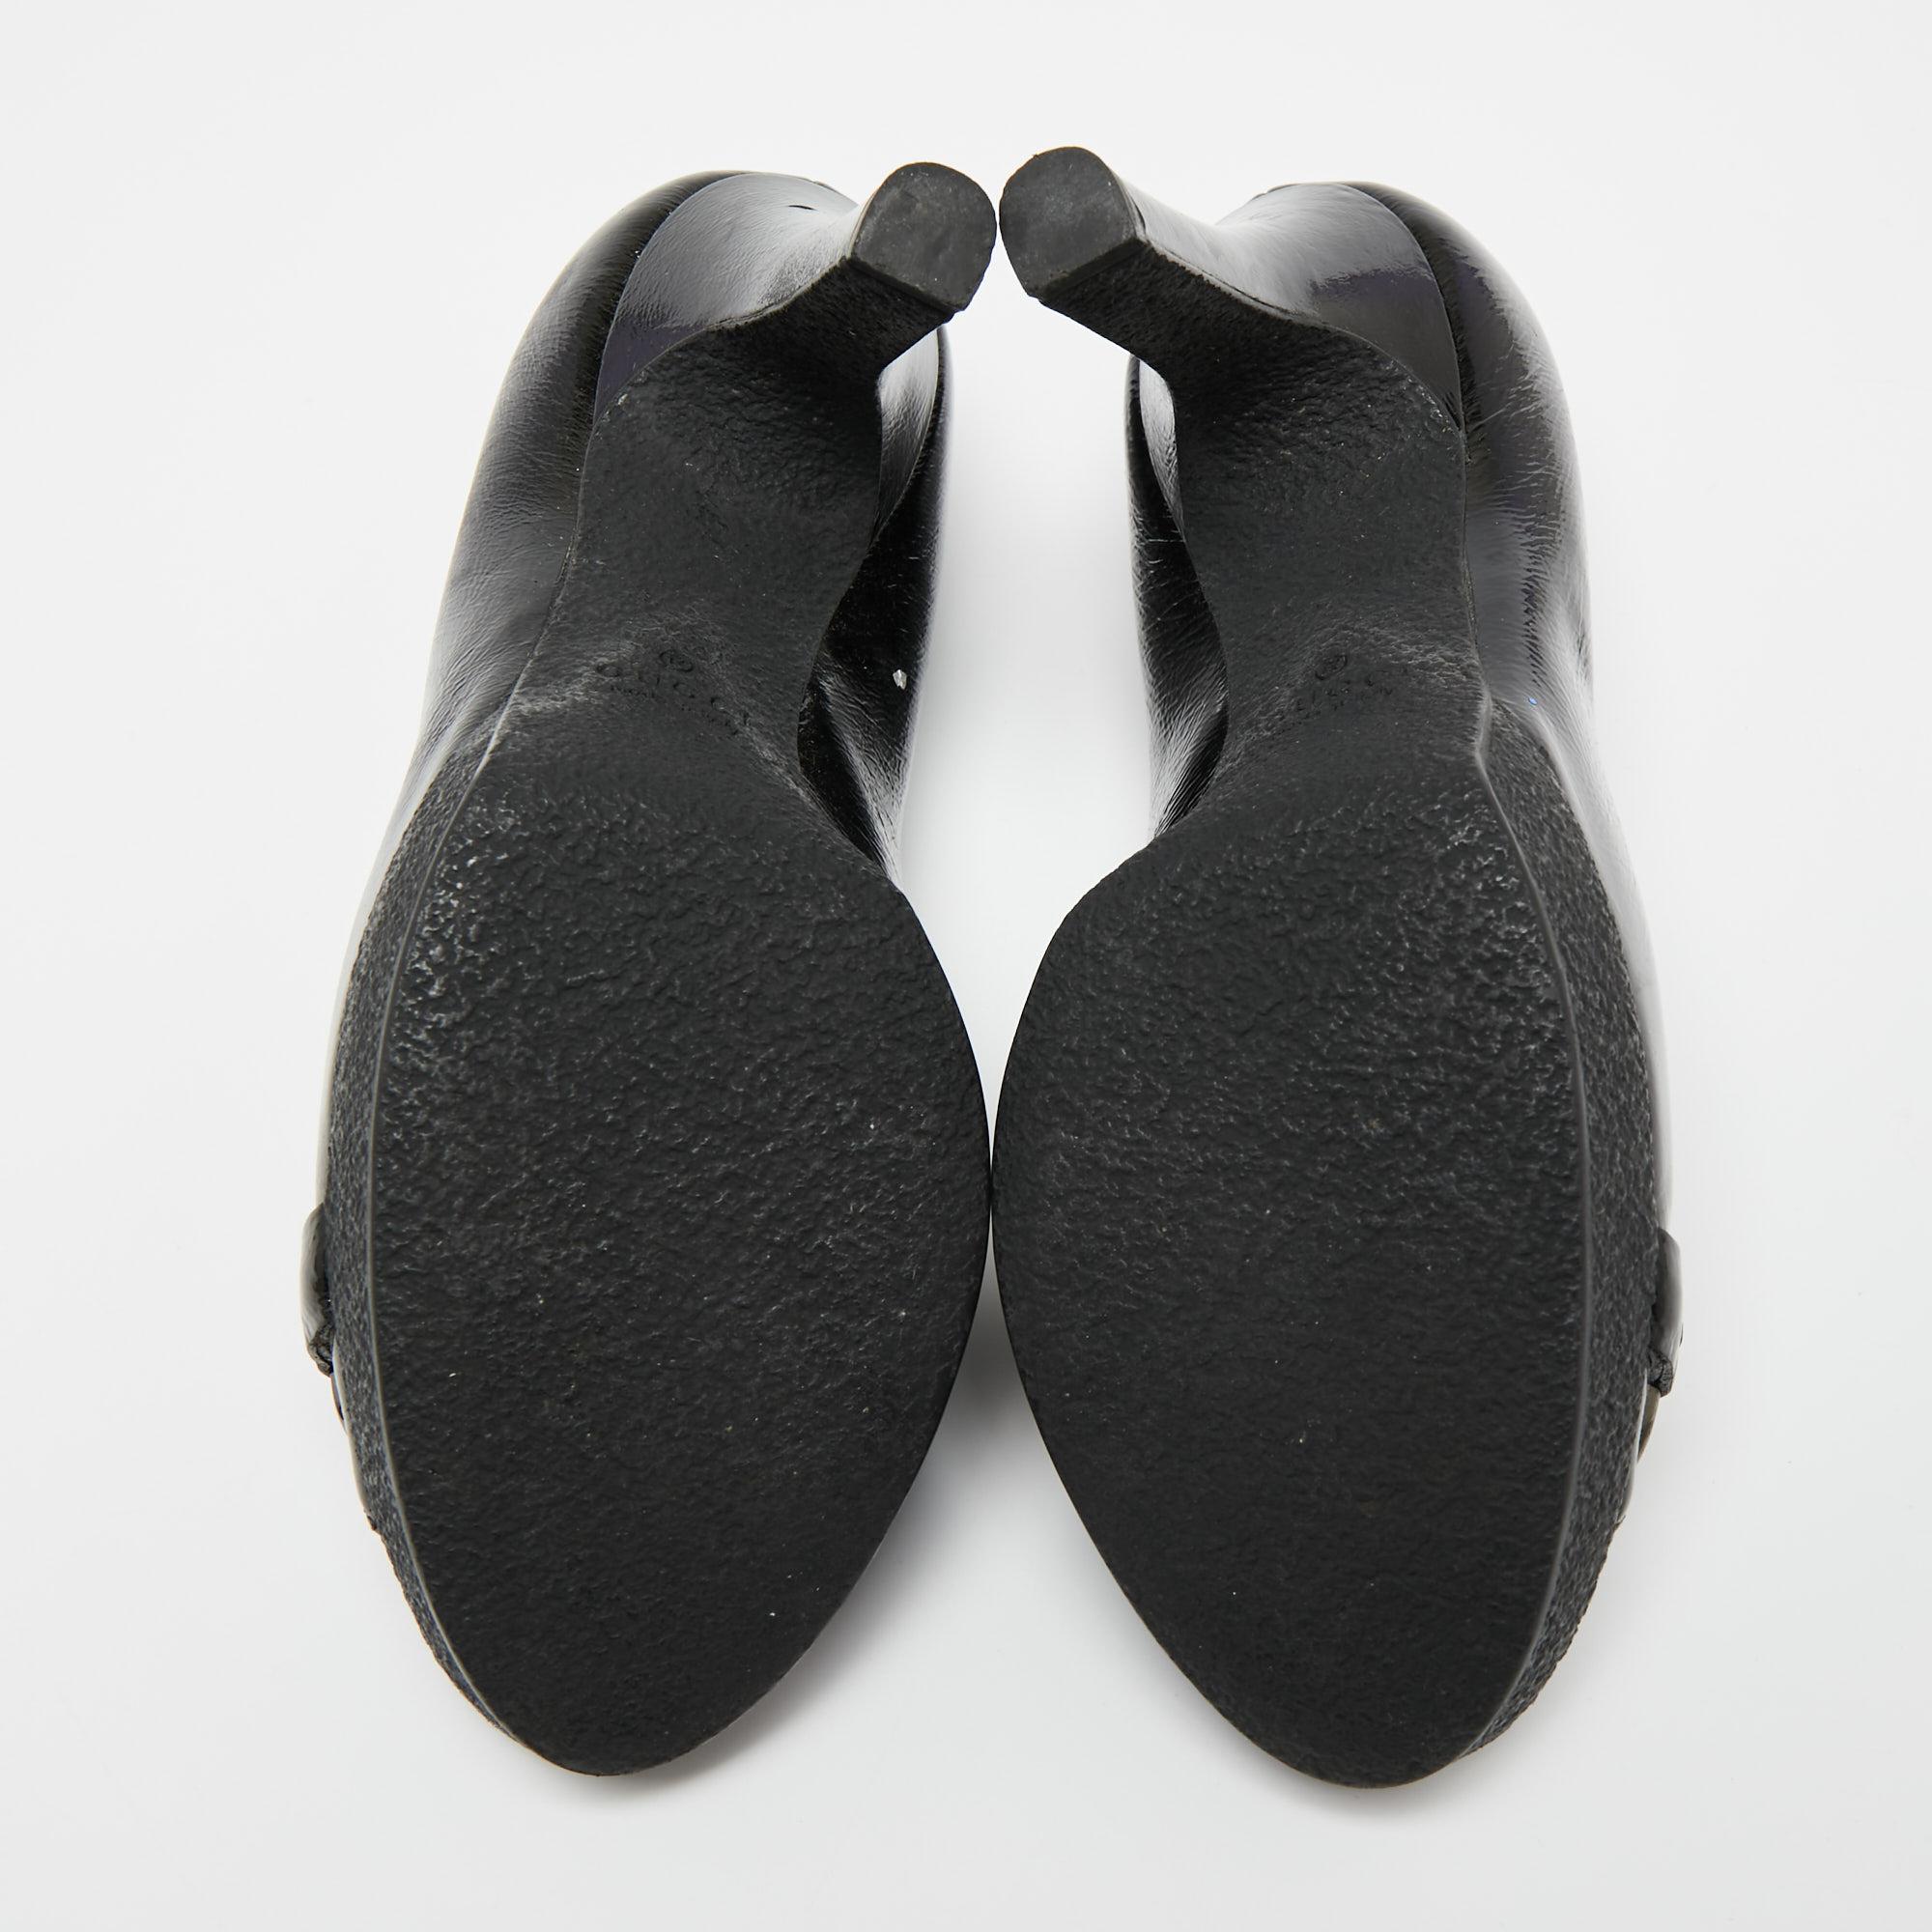 Gucci Black Patent Leather Horsebit Peep Toe Platform Pumps Size 35.5 4